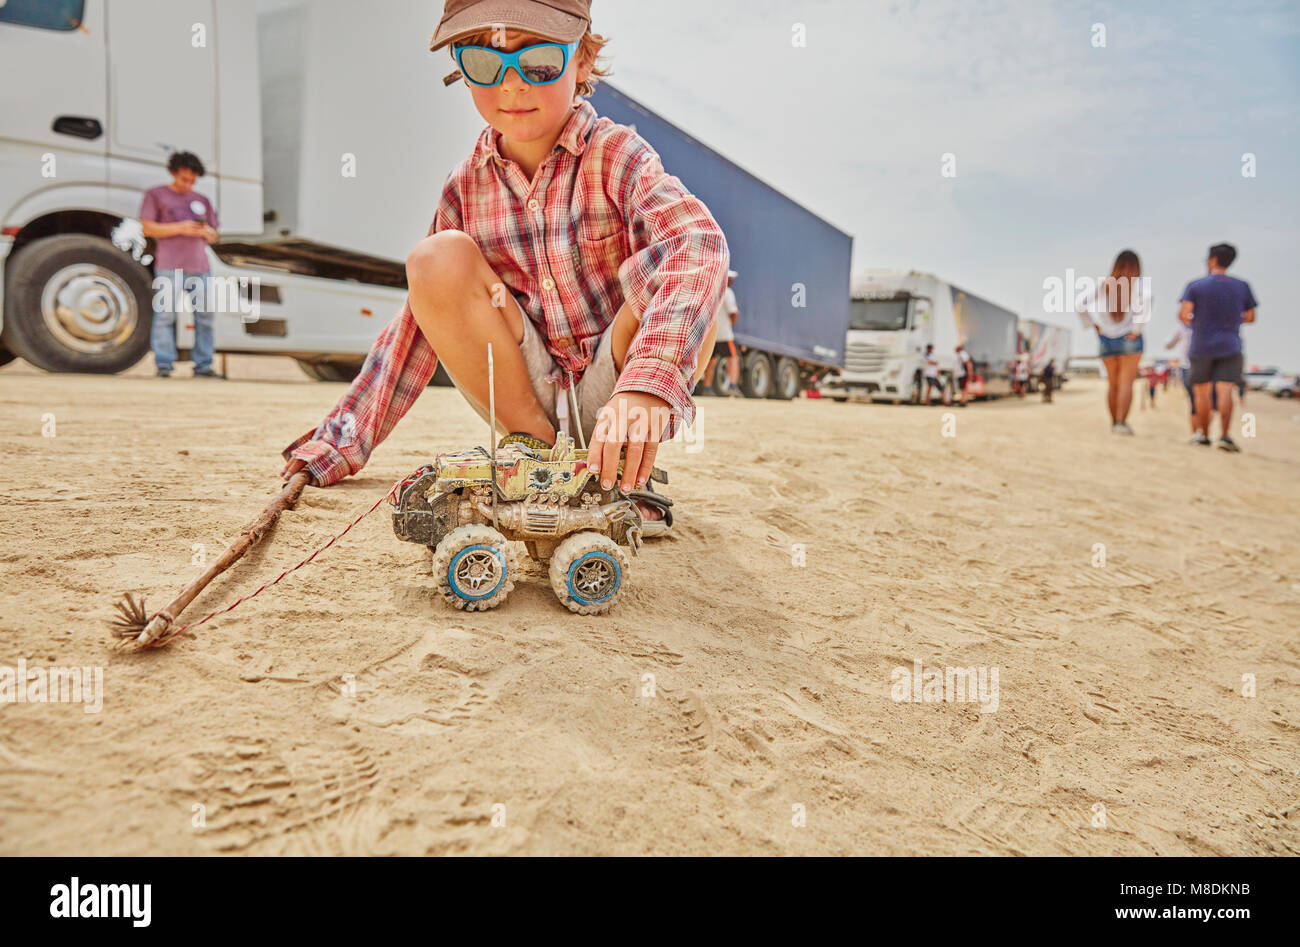 Boy Playing with toy truck dans le sable, Ica, Pérou Banque D'Images